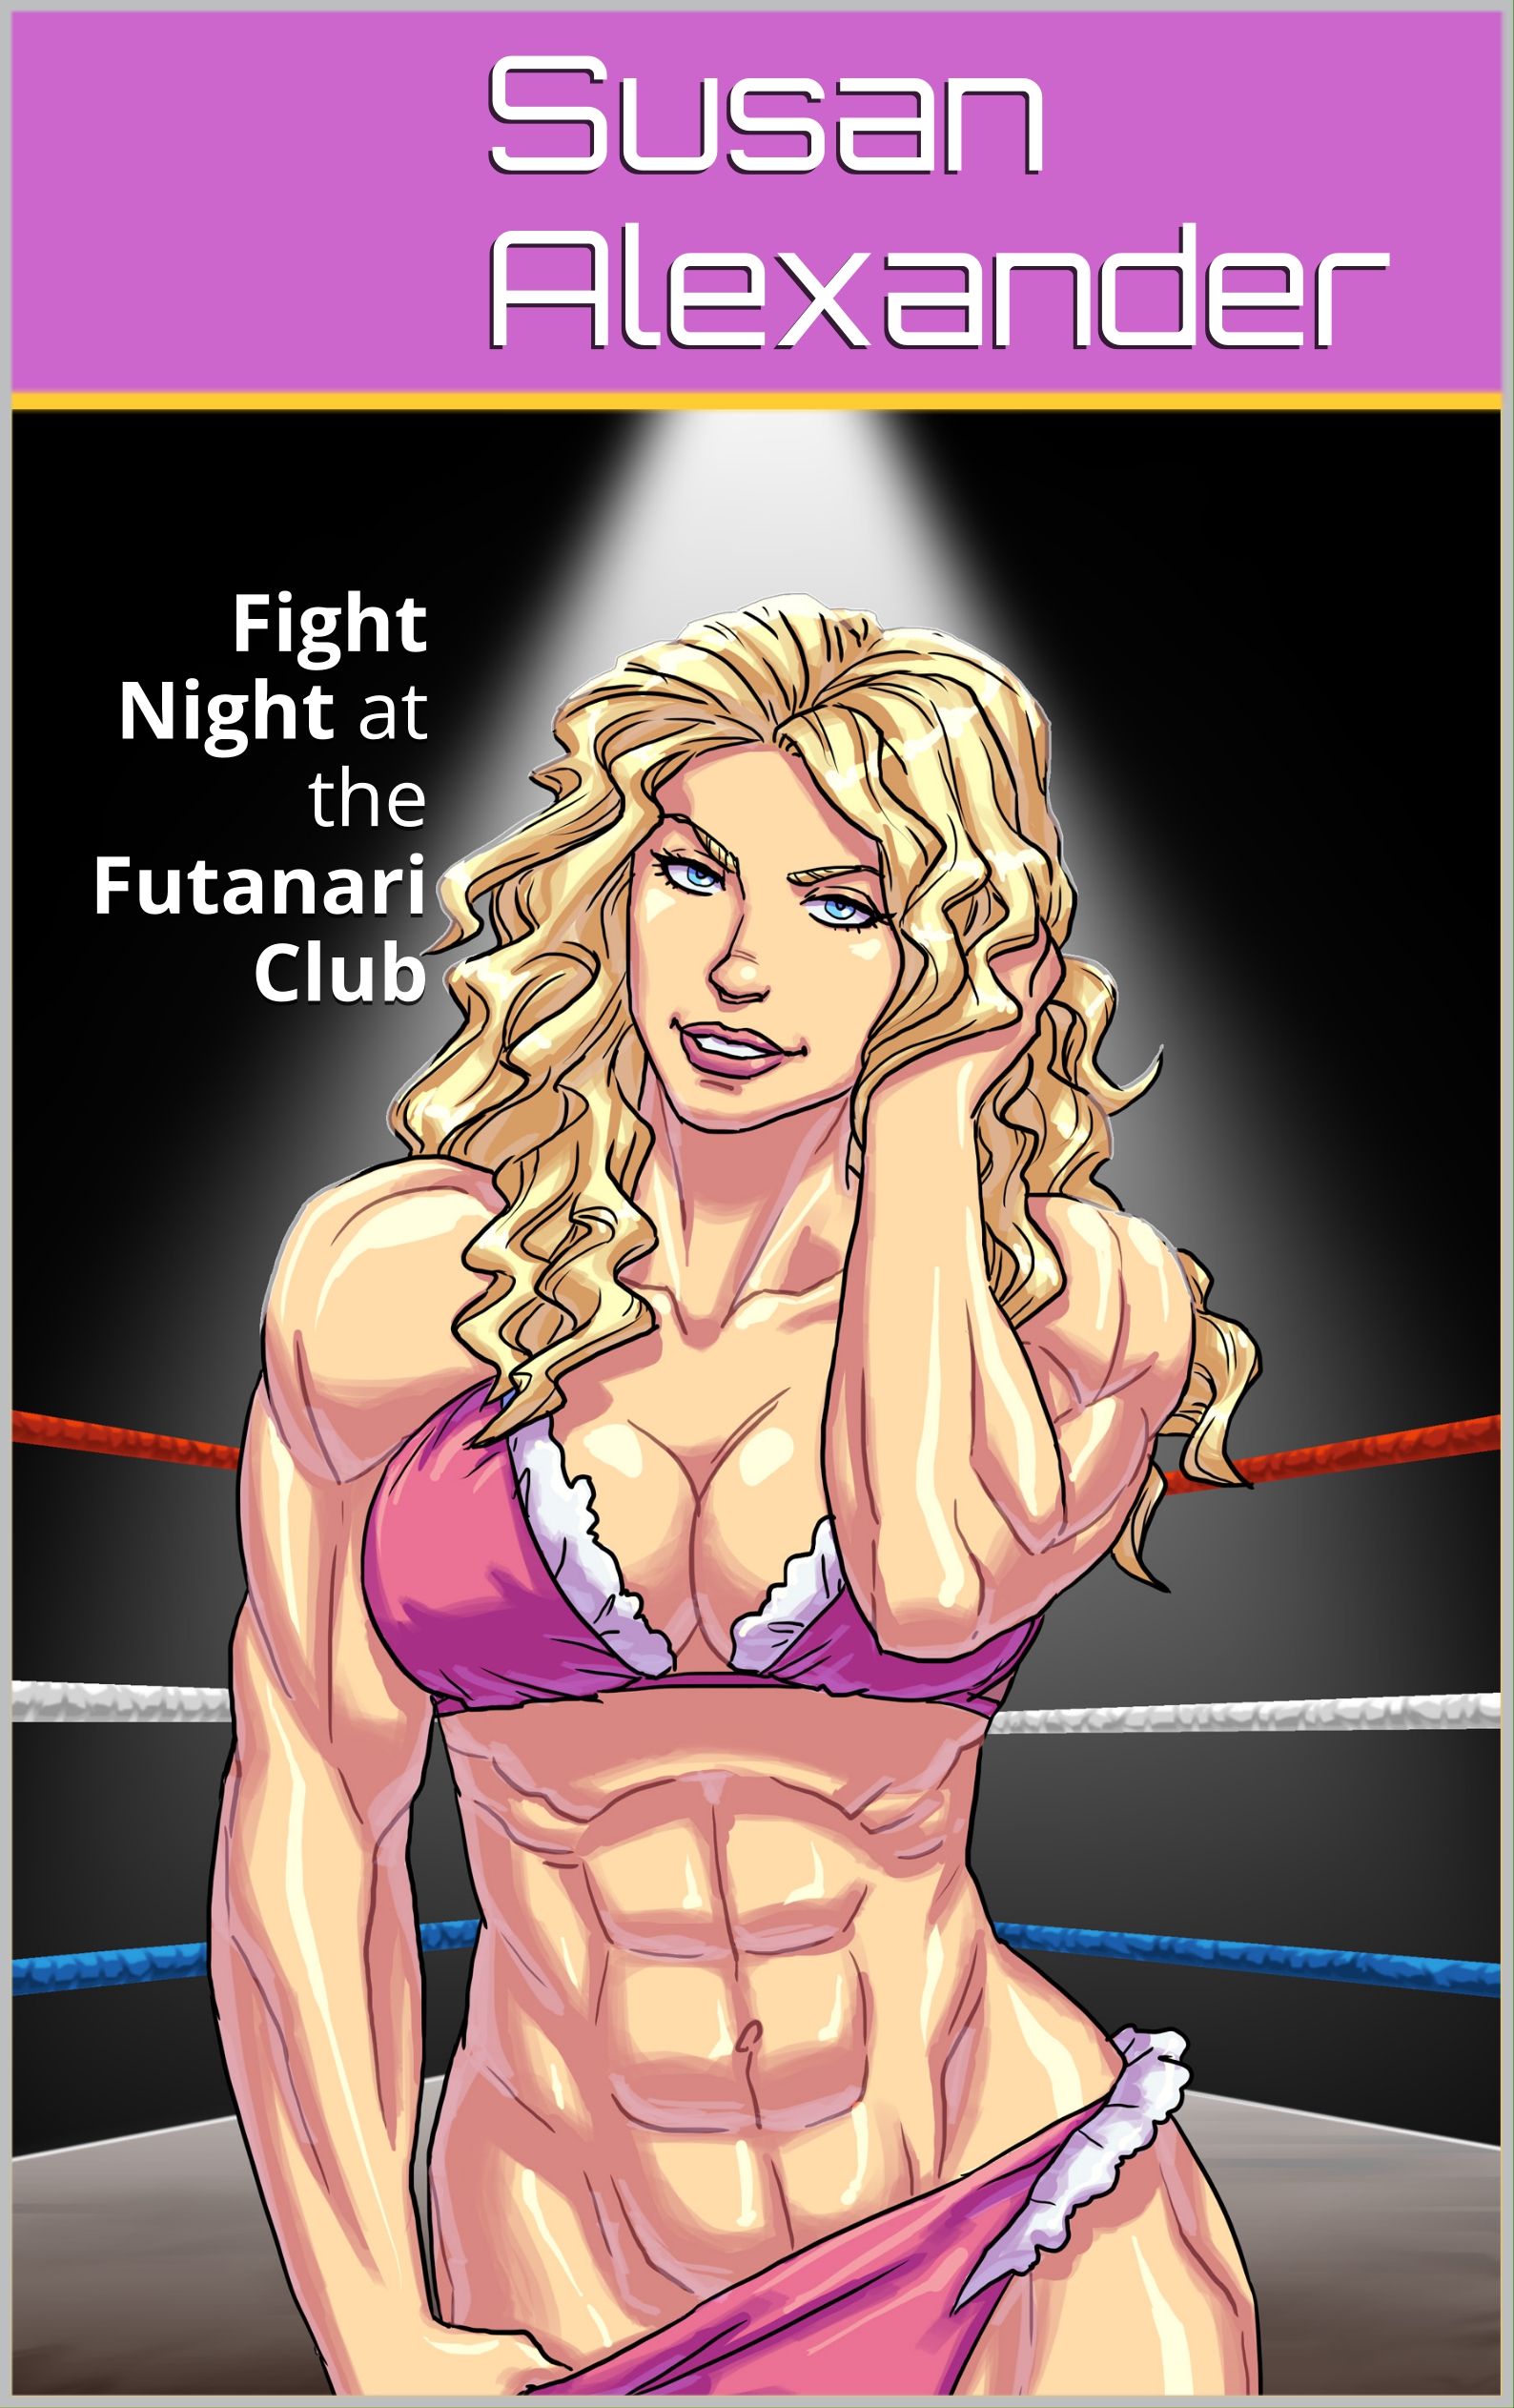 Smashwords â€“ Fight Night at the Futanari Club â€“ a book by Susan Alexander